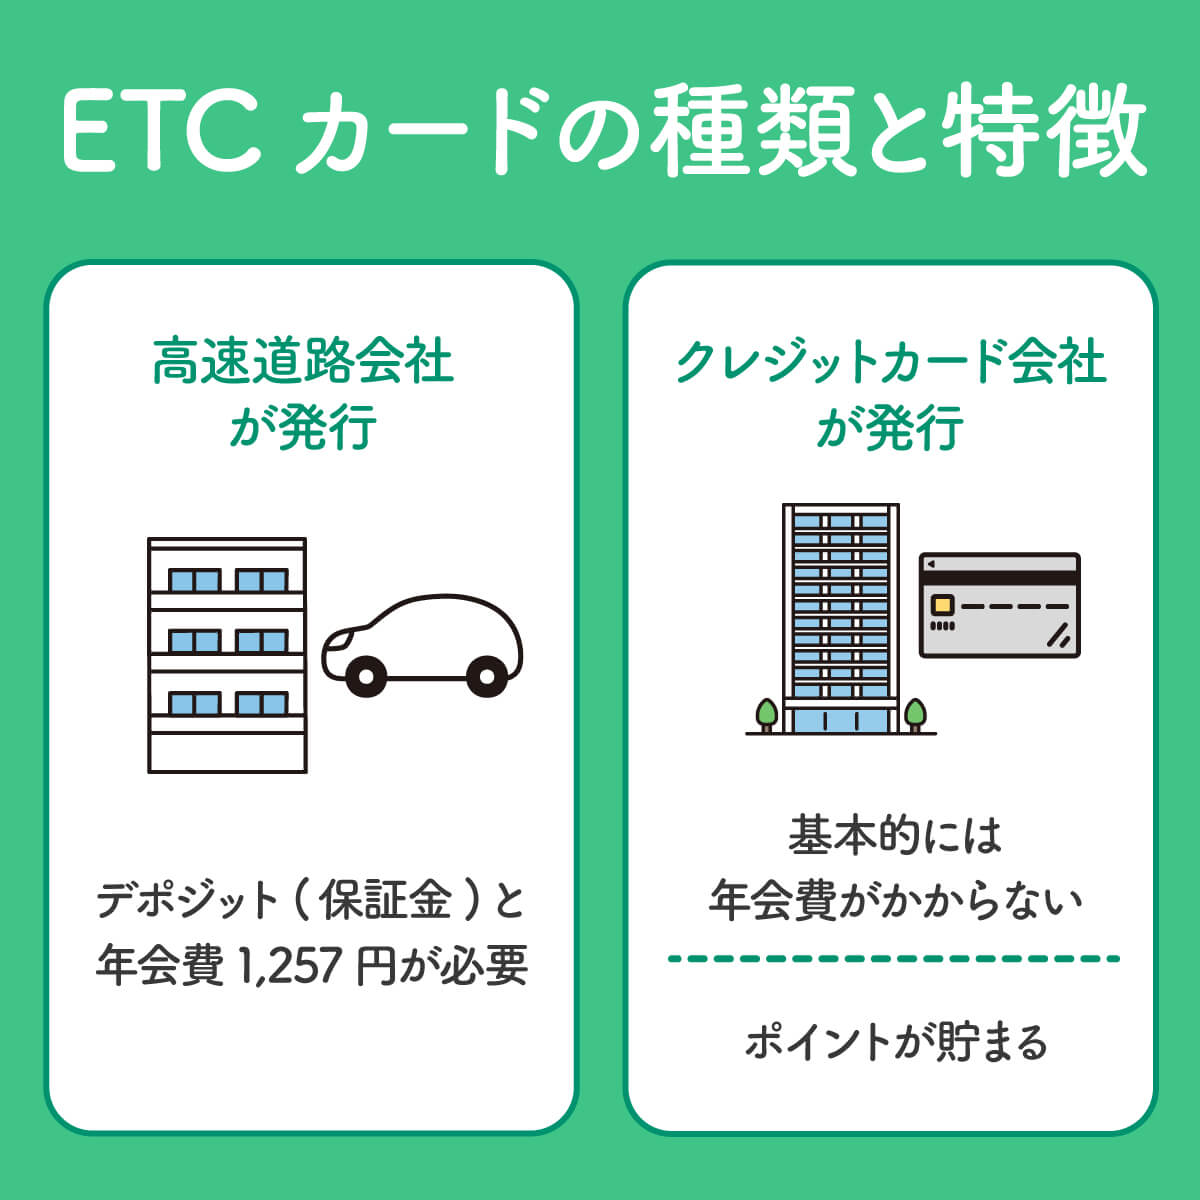 ETCカードの種類と特徴